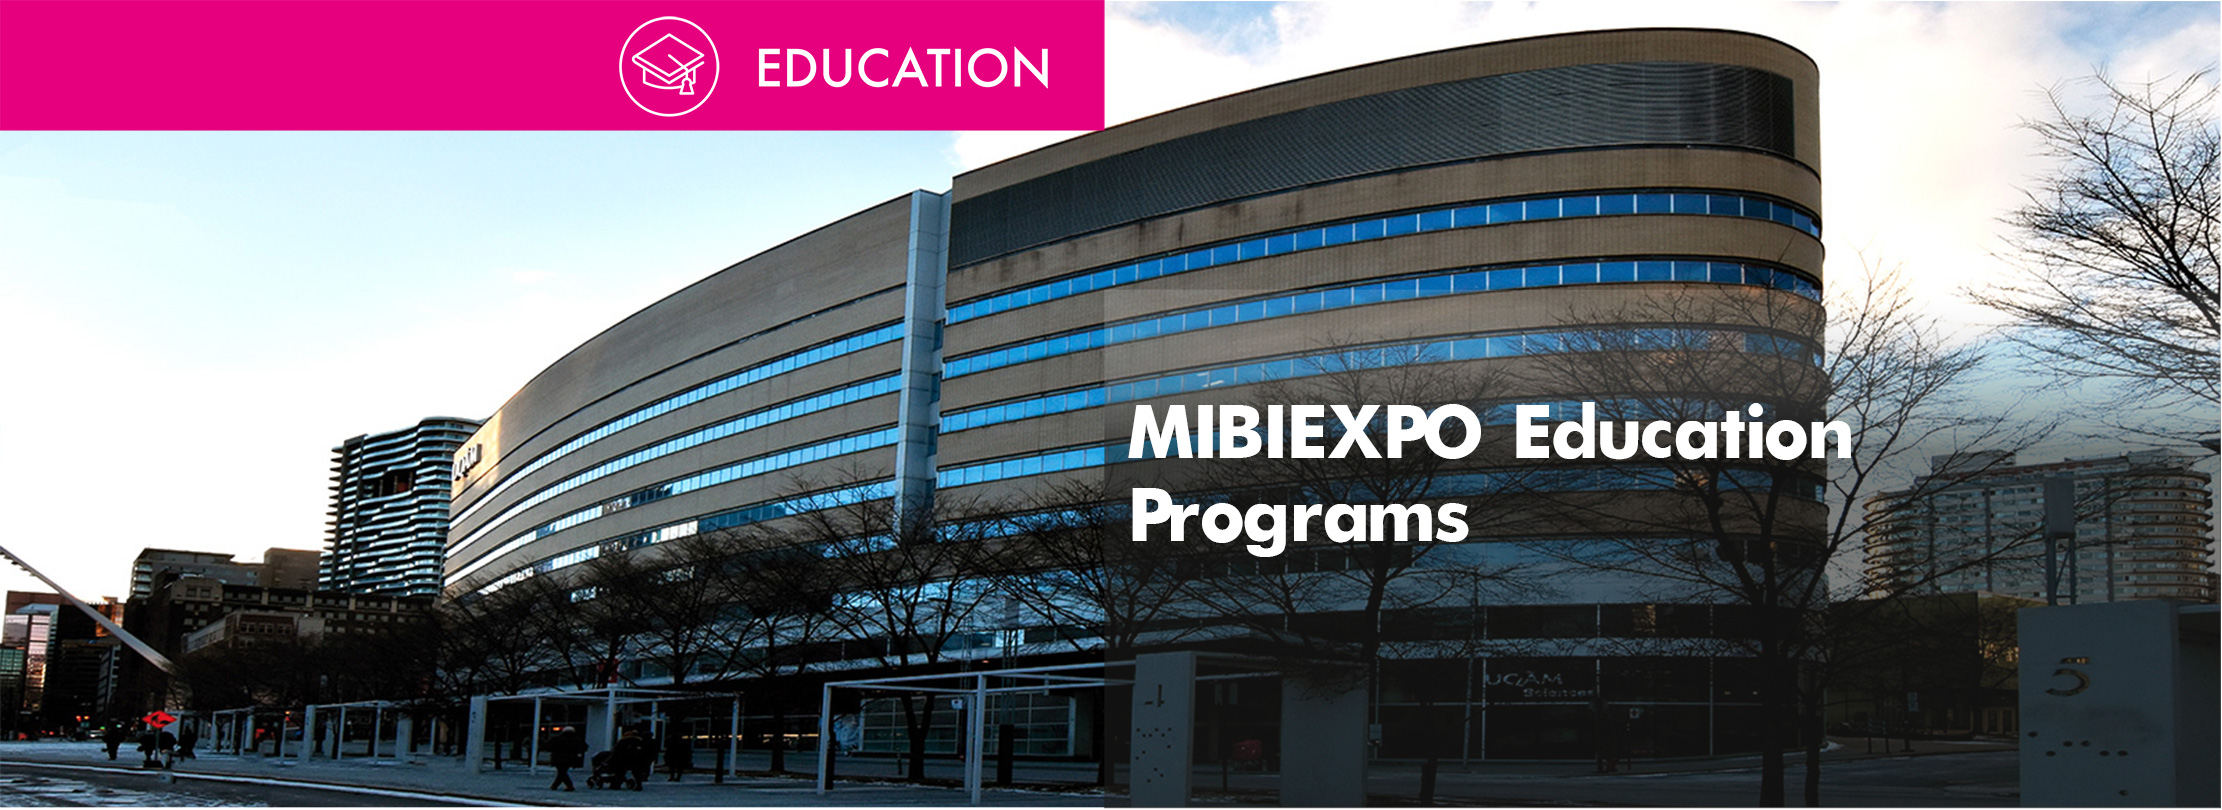 MibiExpo Education Programs